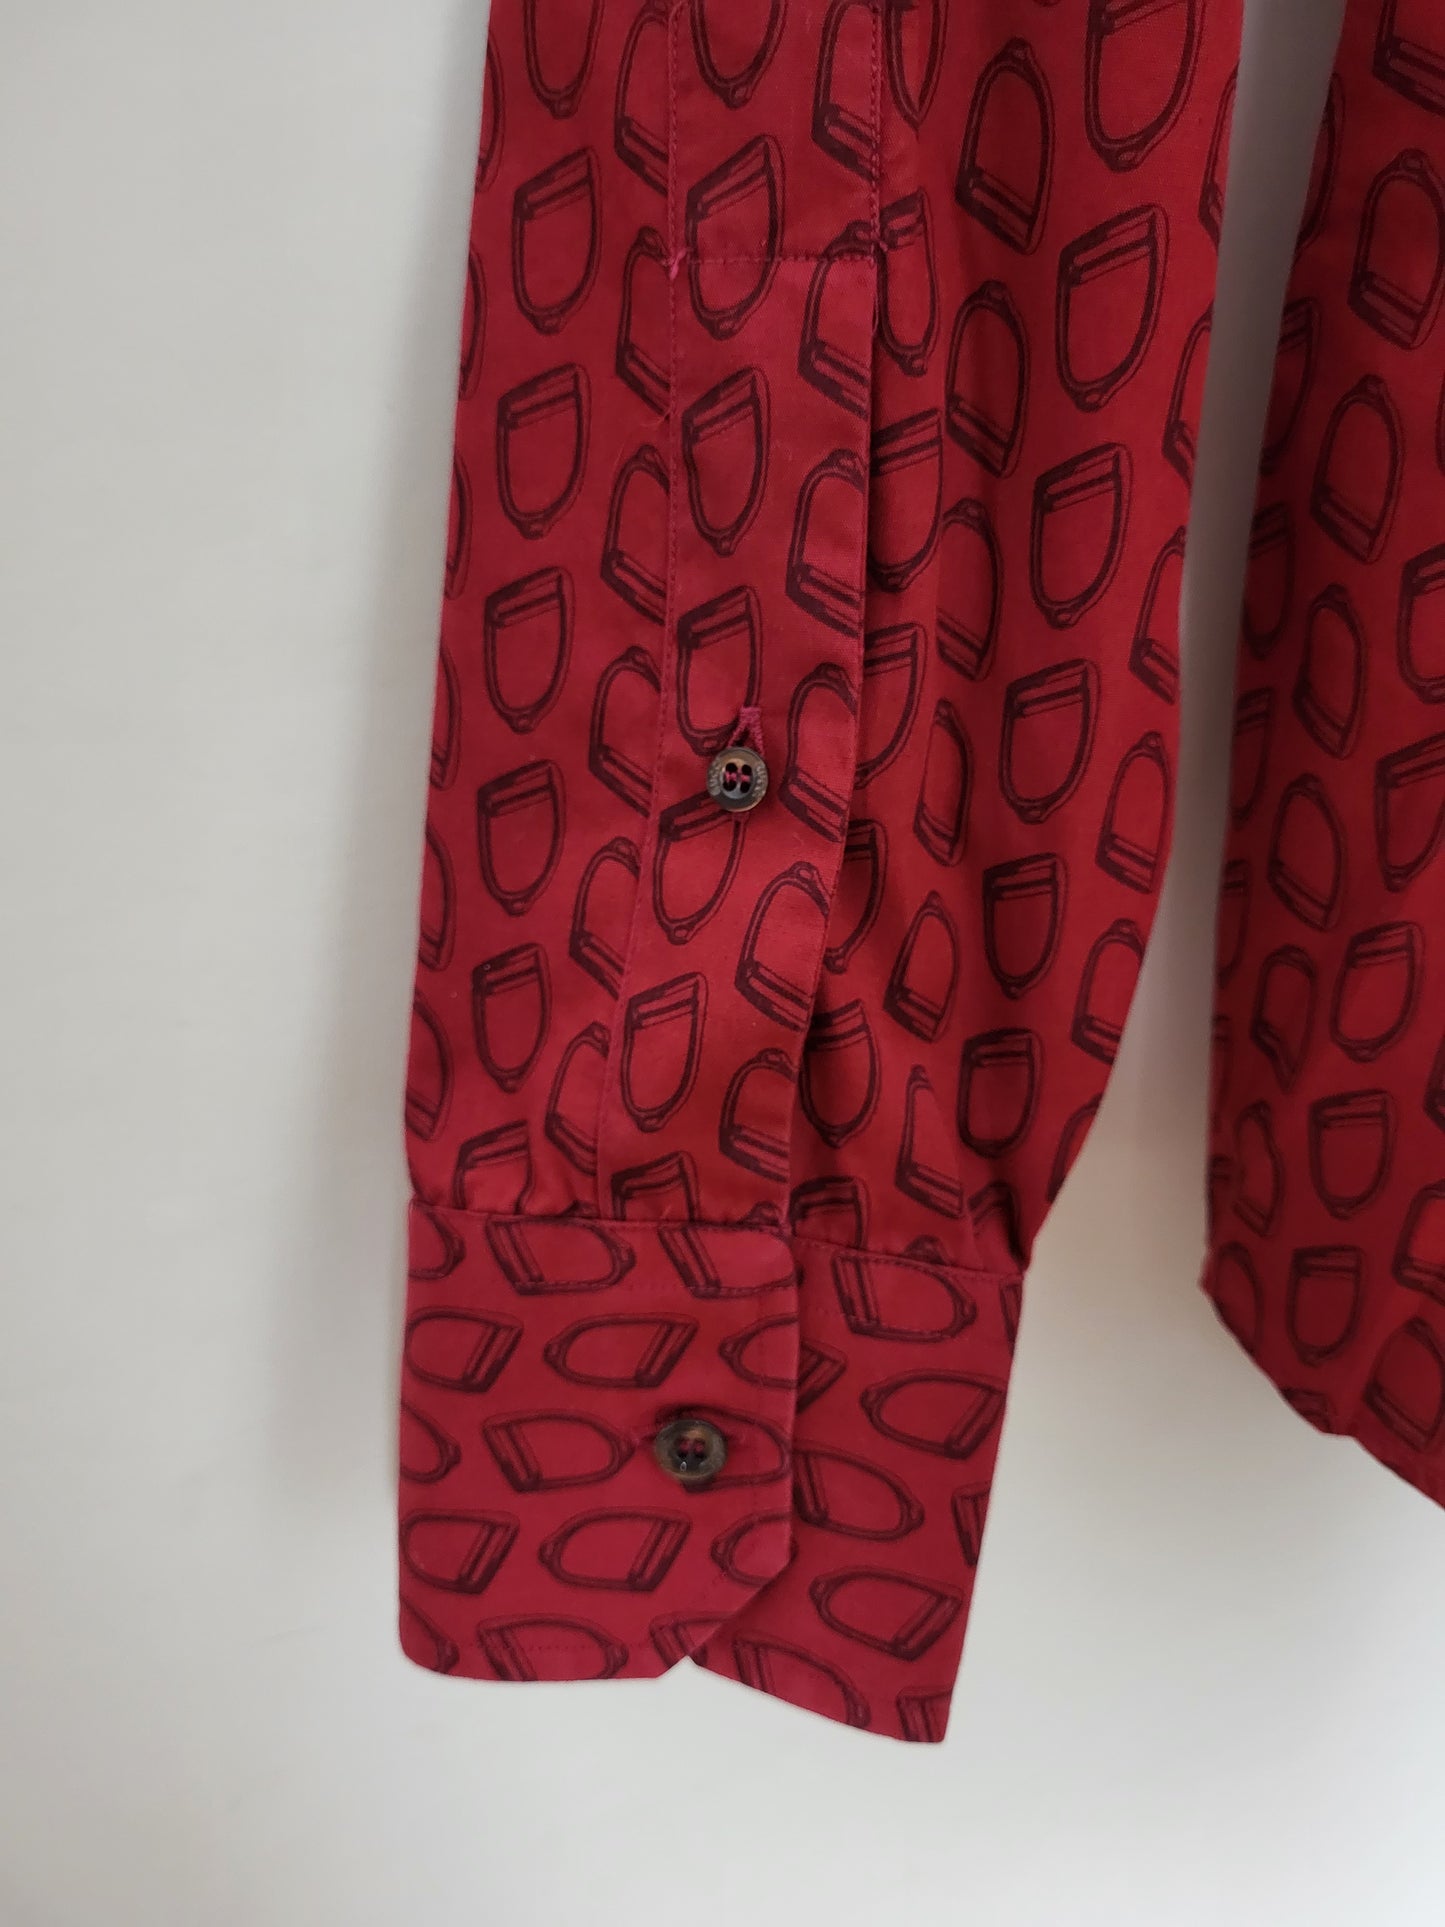 Gucci - Hemd - Print mit Muster - Rot - Herren - L